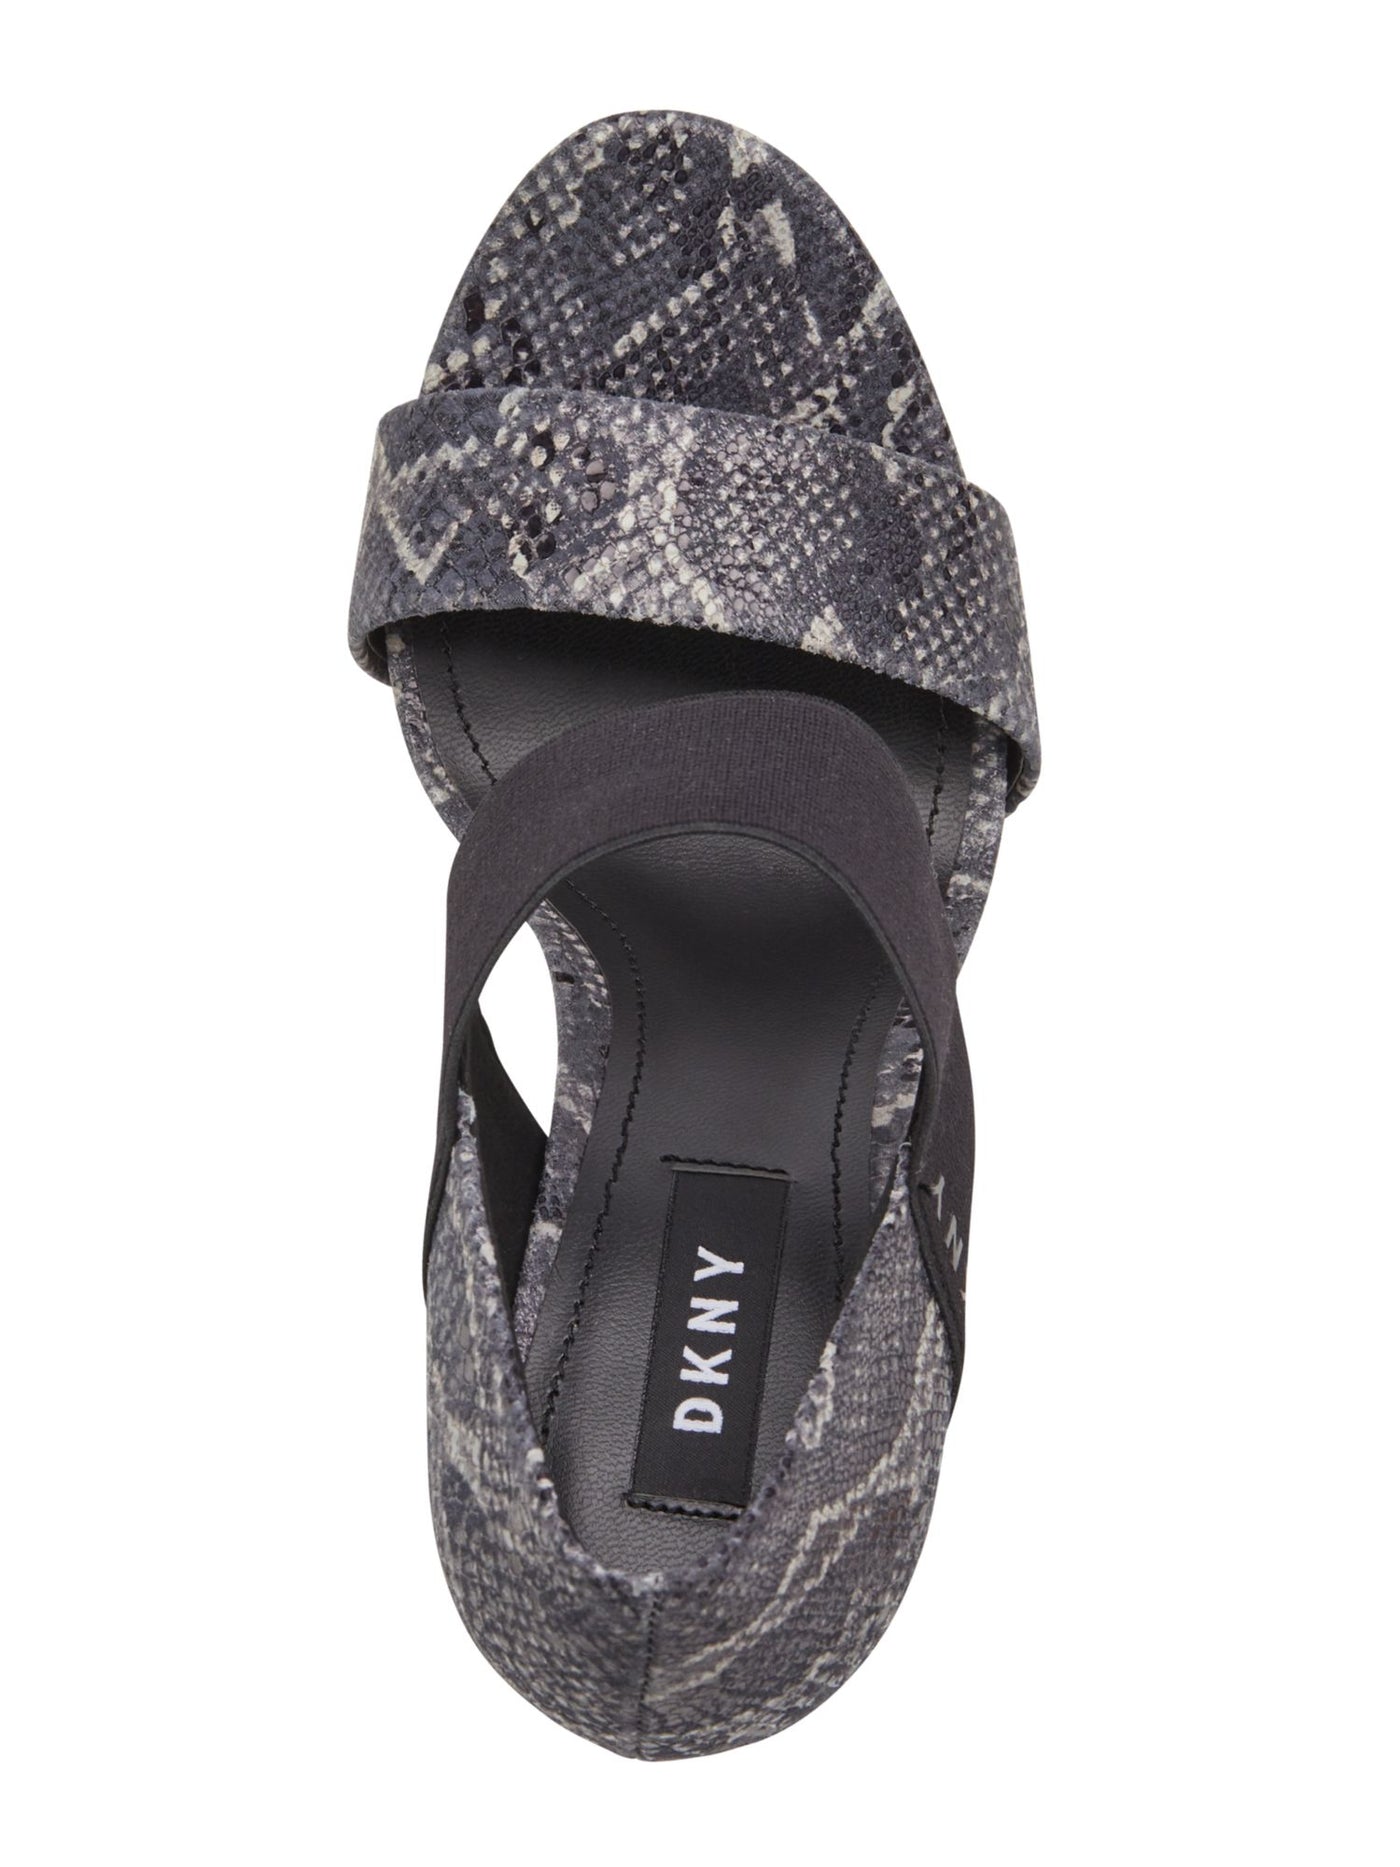 DKNY Womens Gray Snake Print Strappy Cushioned Stretch Iva Round Toe Stiletto Slip On Dress Slingback Sandal 8.5